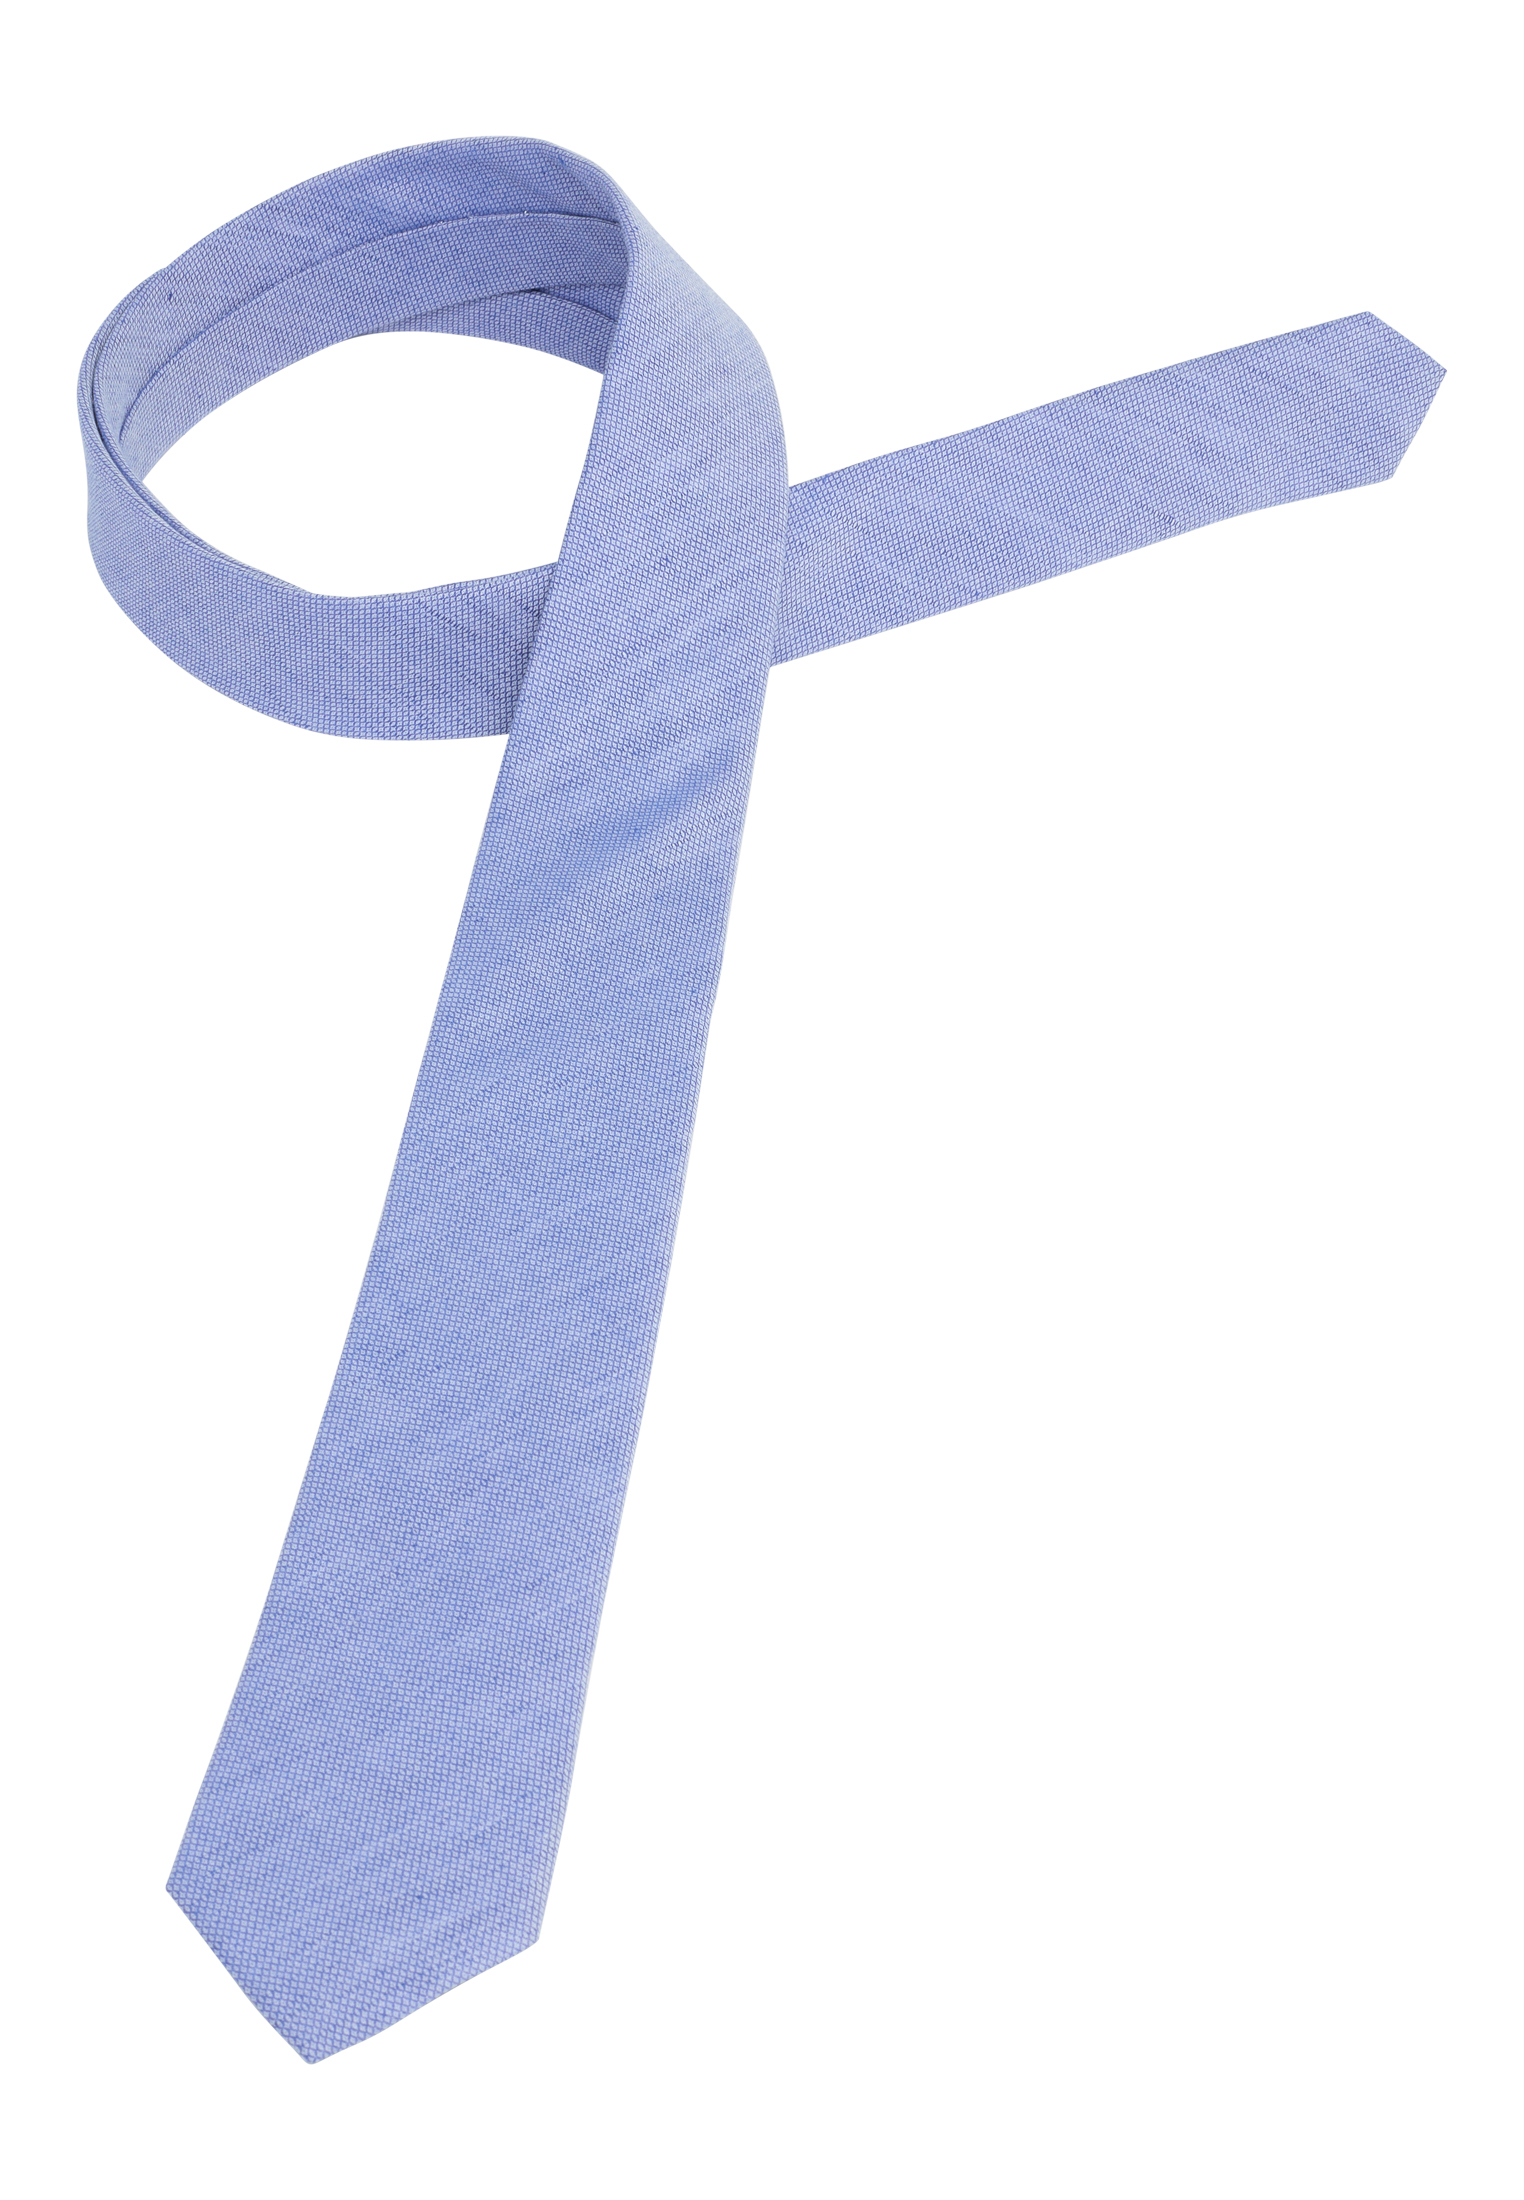 Krawatte in royal blau strukturiert | | 142 blau 1AC01947-01-51-142 | royal